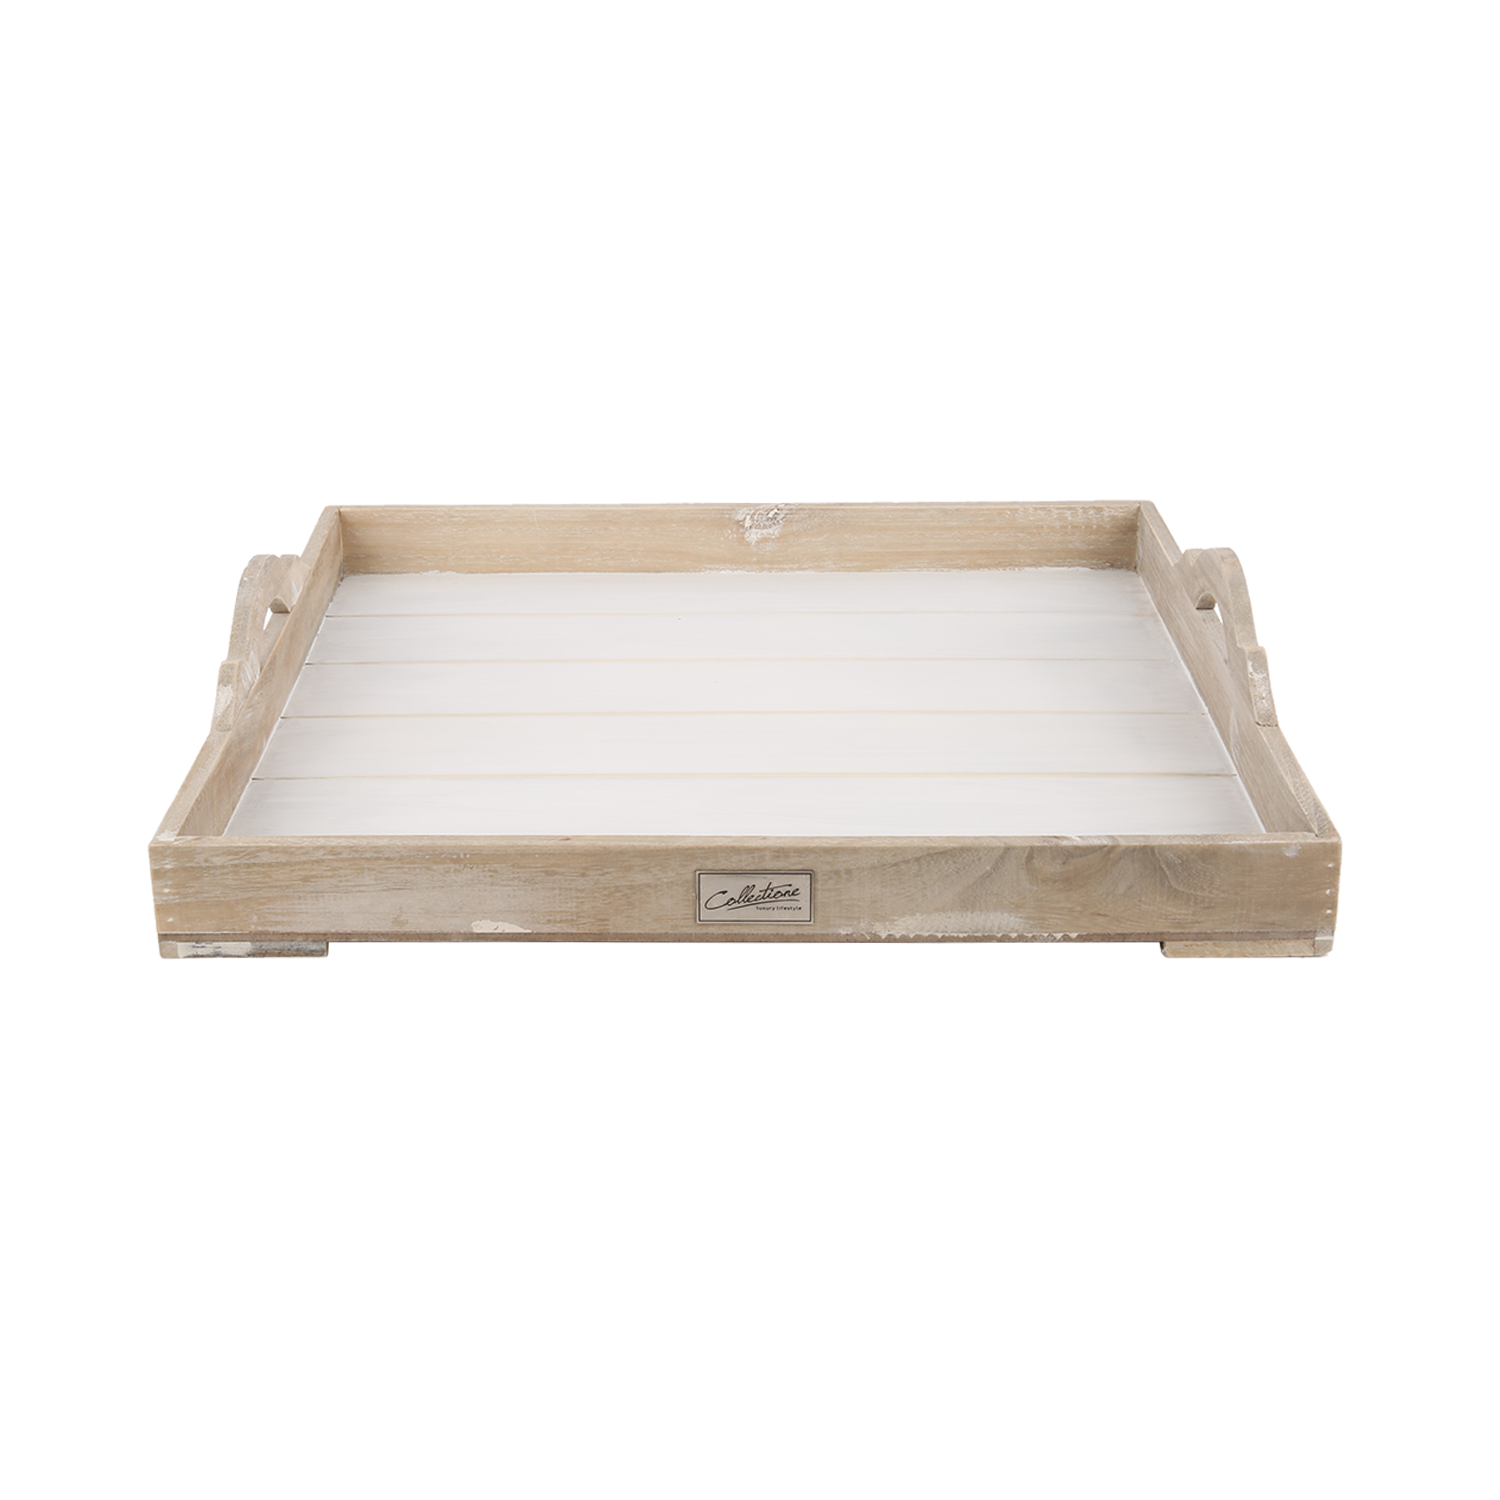 Square tray XL white + natural